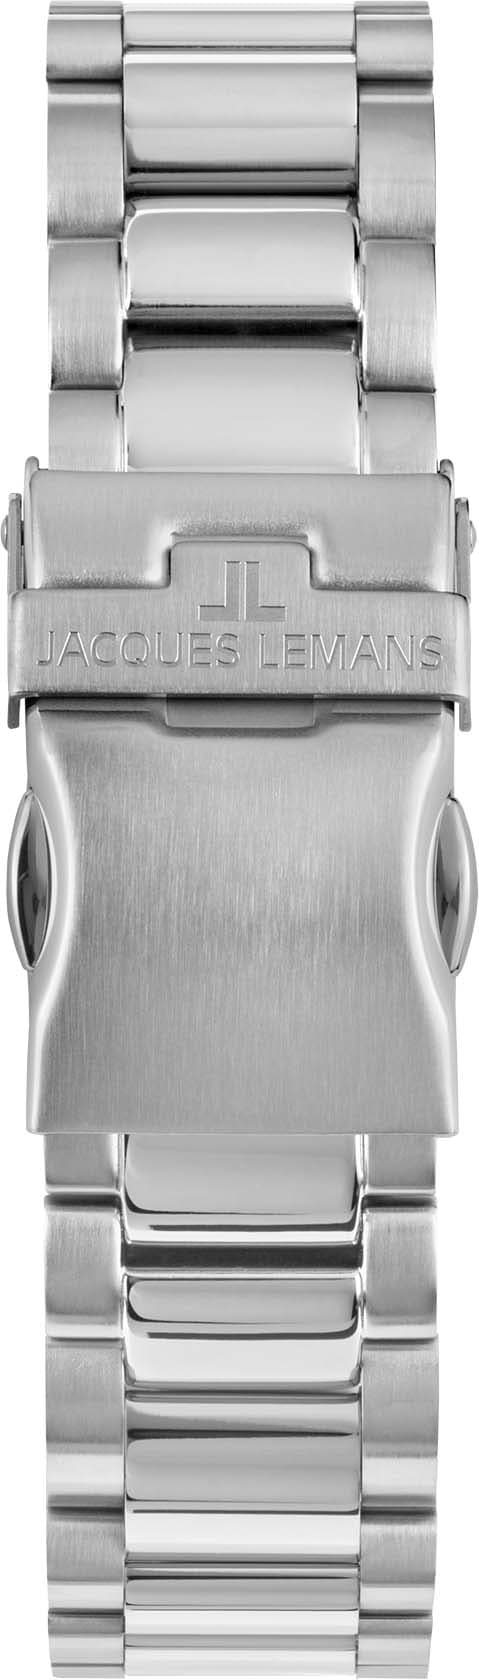 Jacques Lemans Chronograph »Liverpool, 1-2140F« online kaufen | I\'m walking